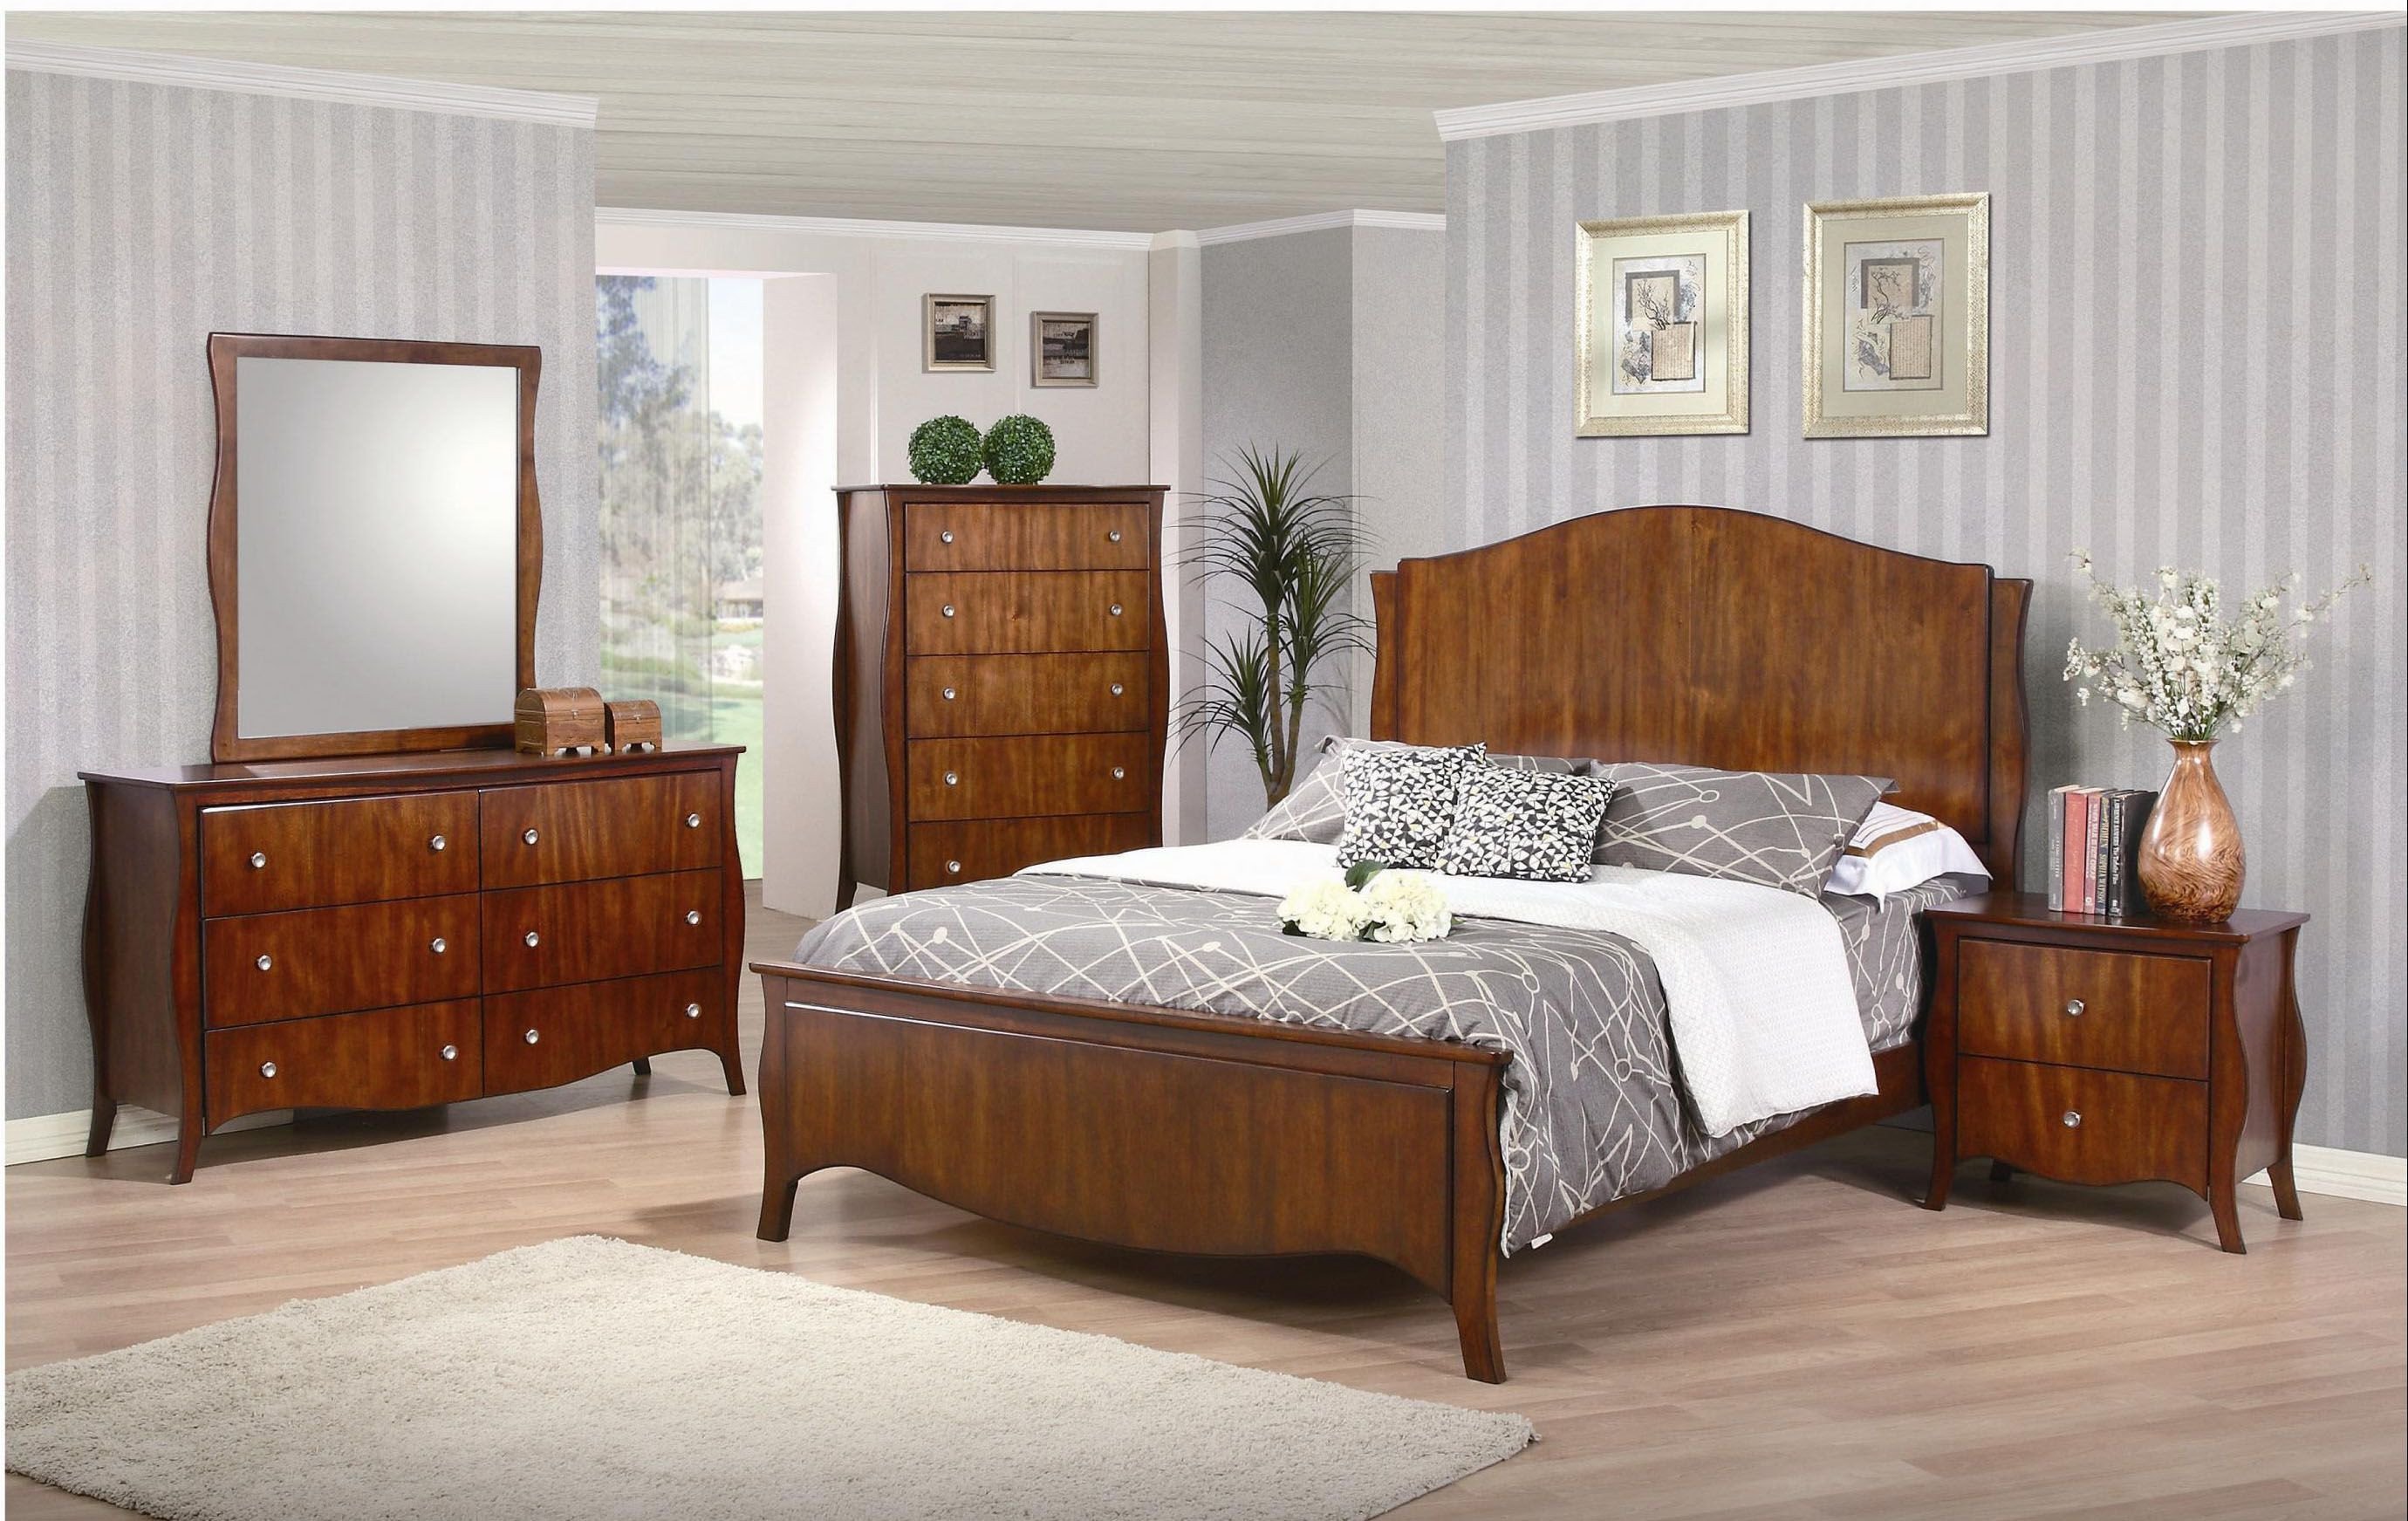 broyhill bedroom furniture at big lots